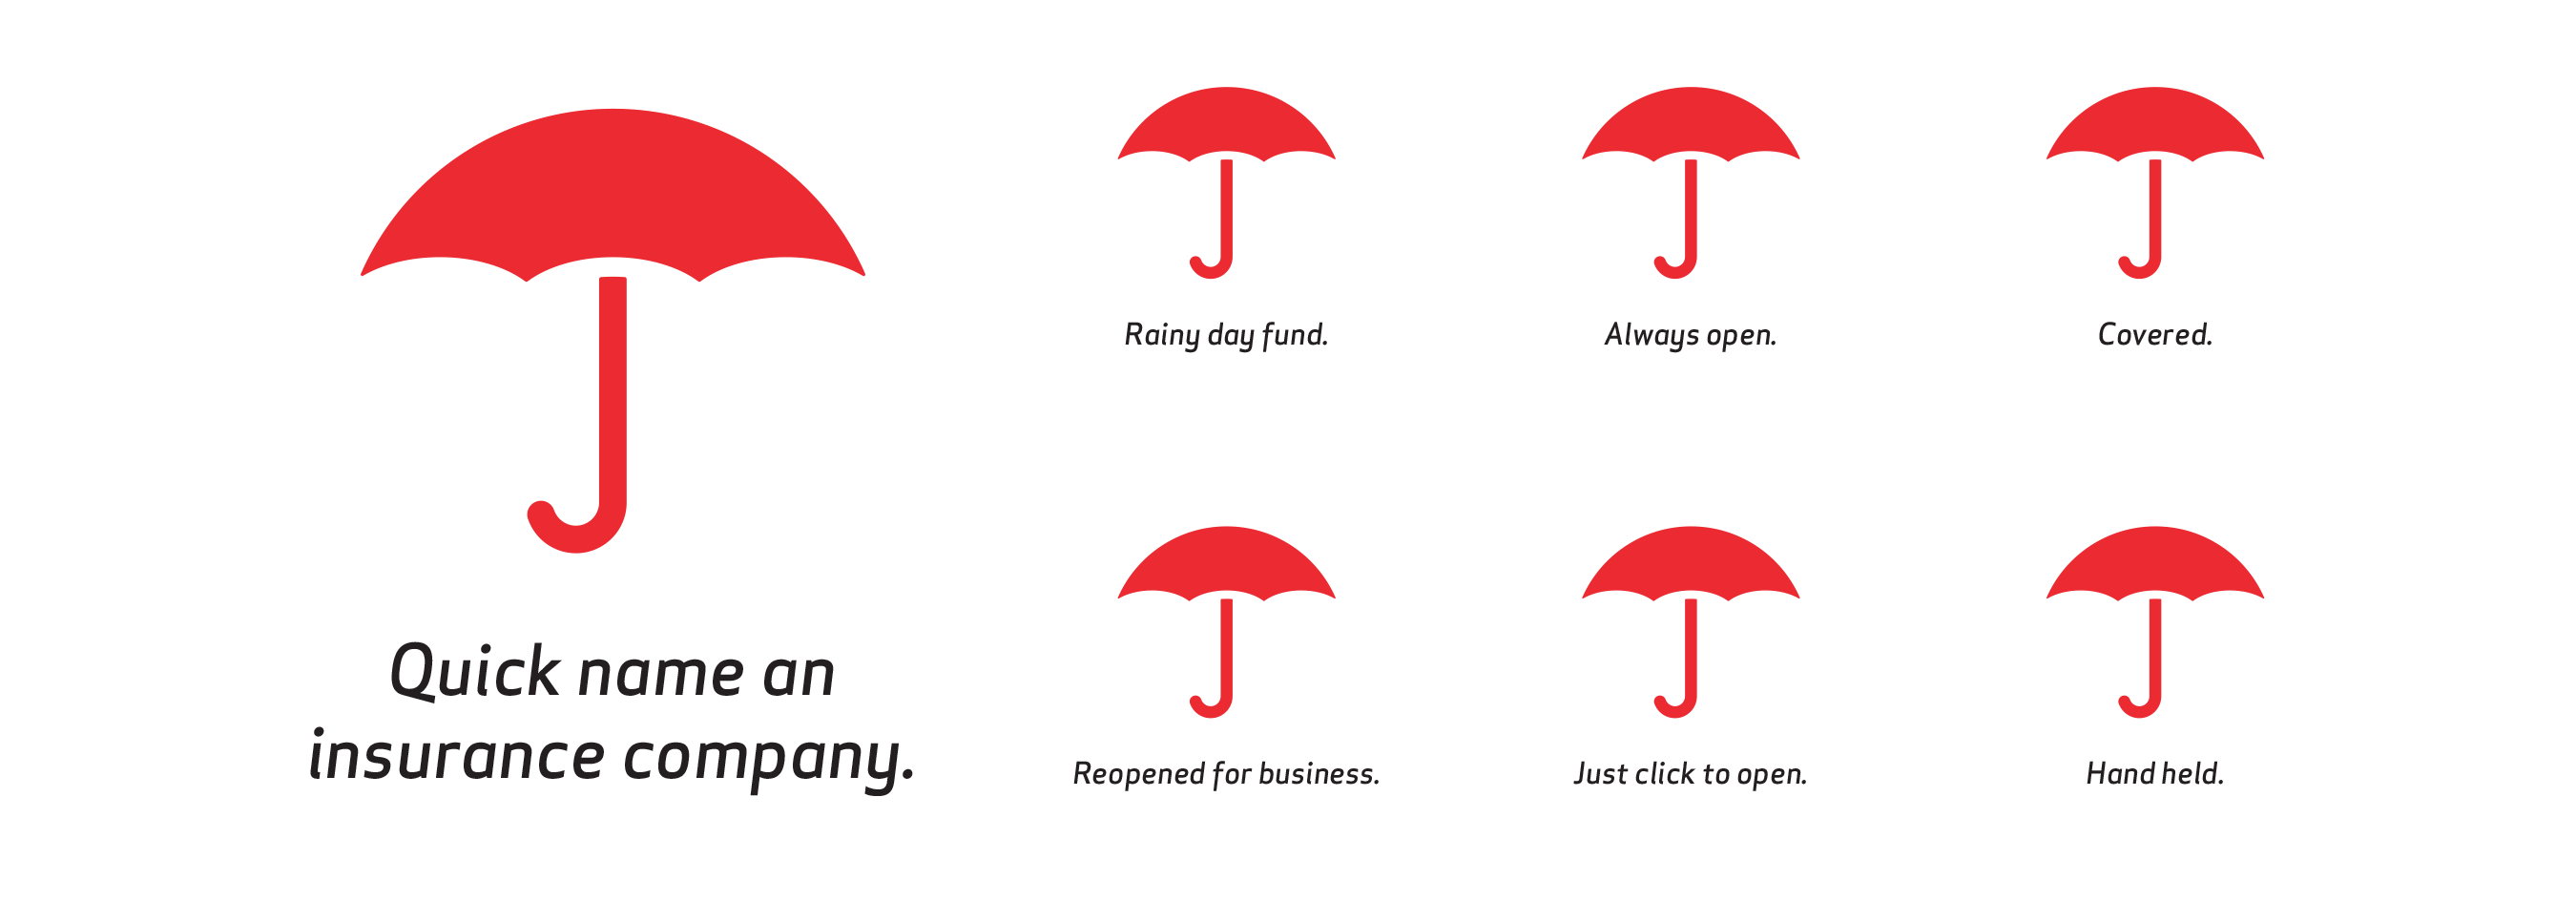 Re Umbrella Logo - Travelers Insurance - Replace